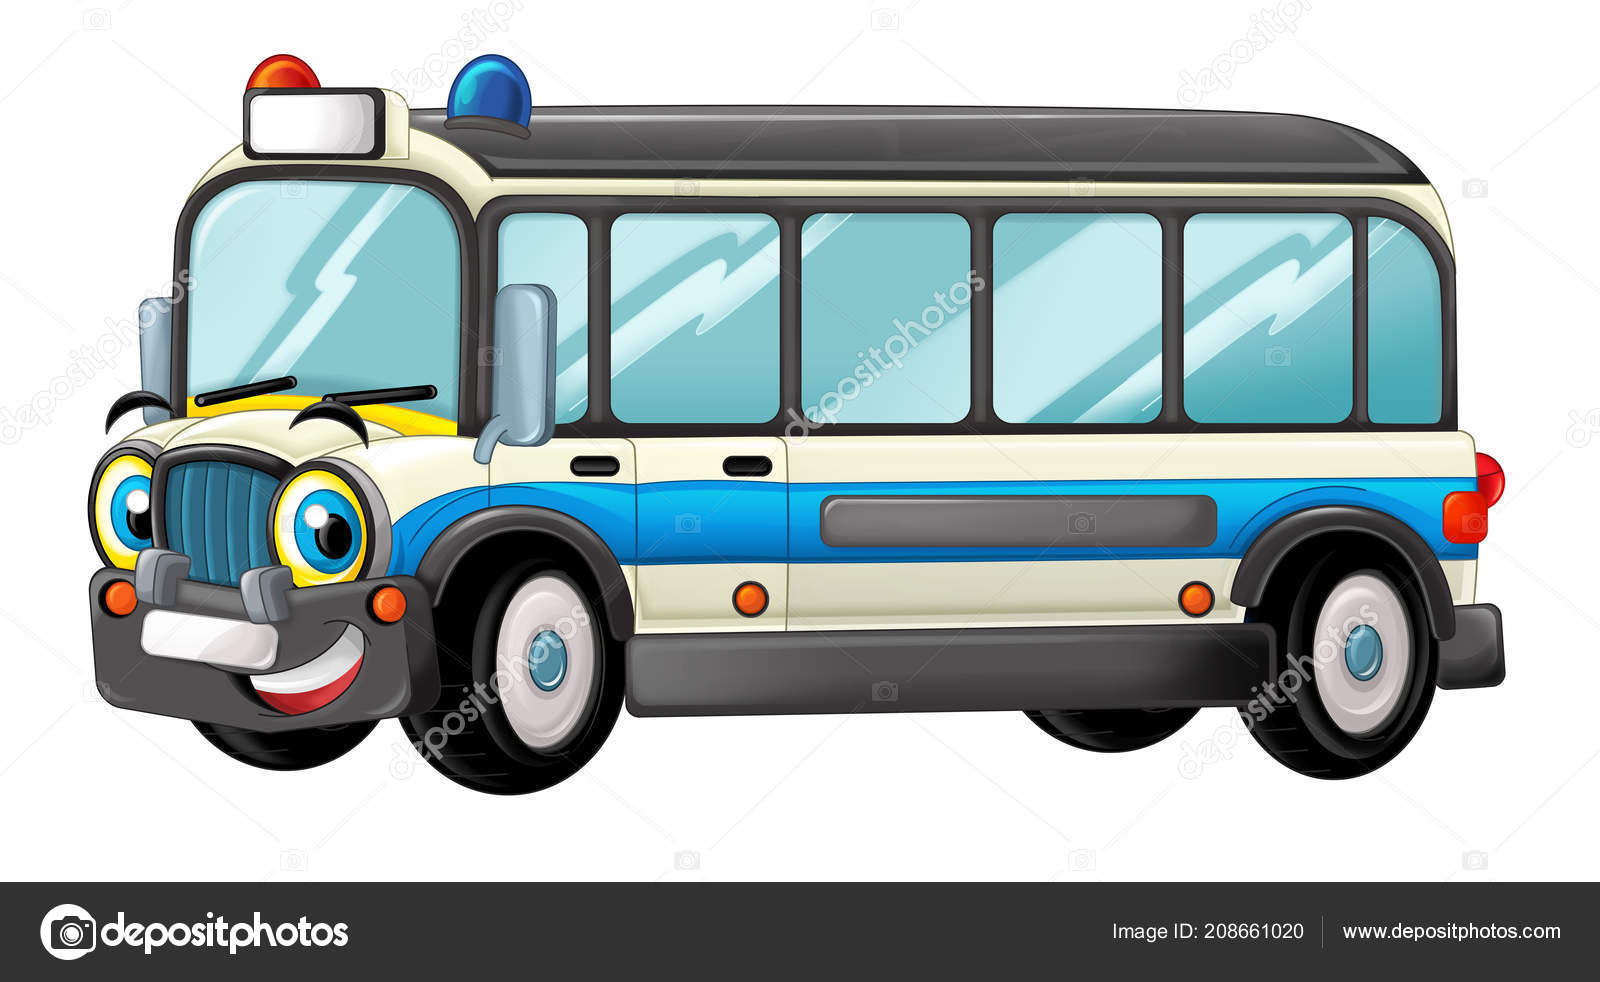 Cartoon Scene Happy Ambulance Truck White Background Illustration Children  Stock Photo by ©illustrator_hft 208661020